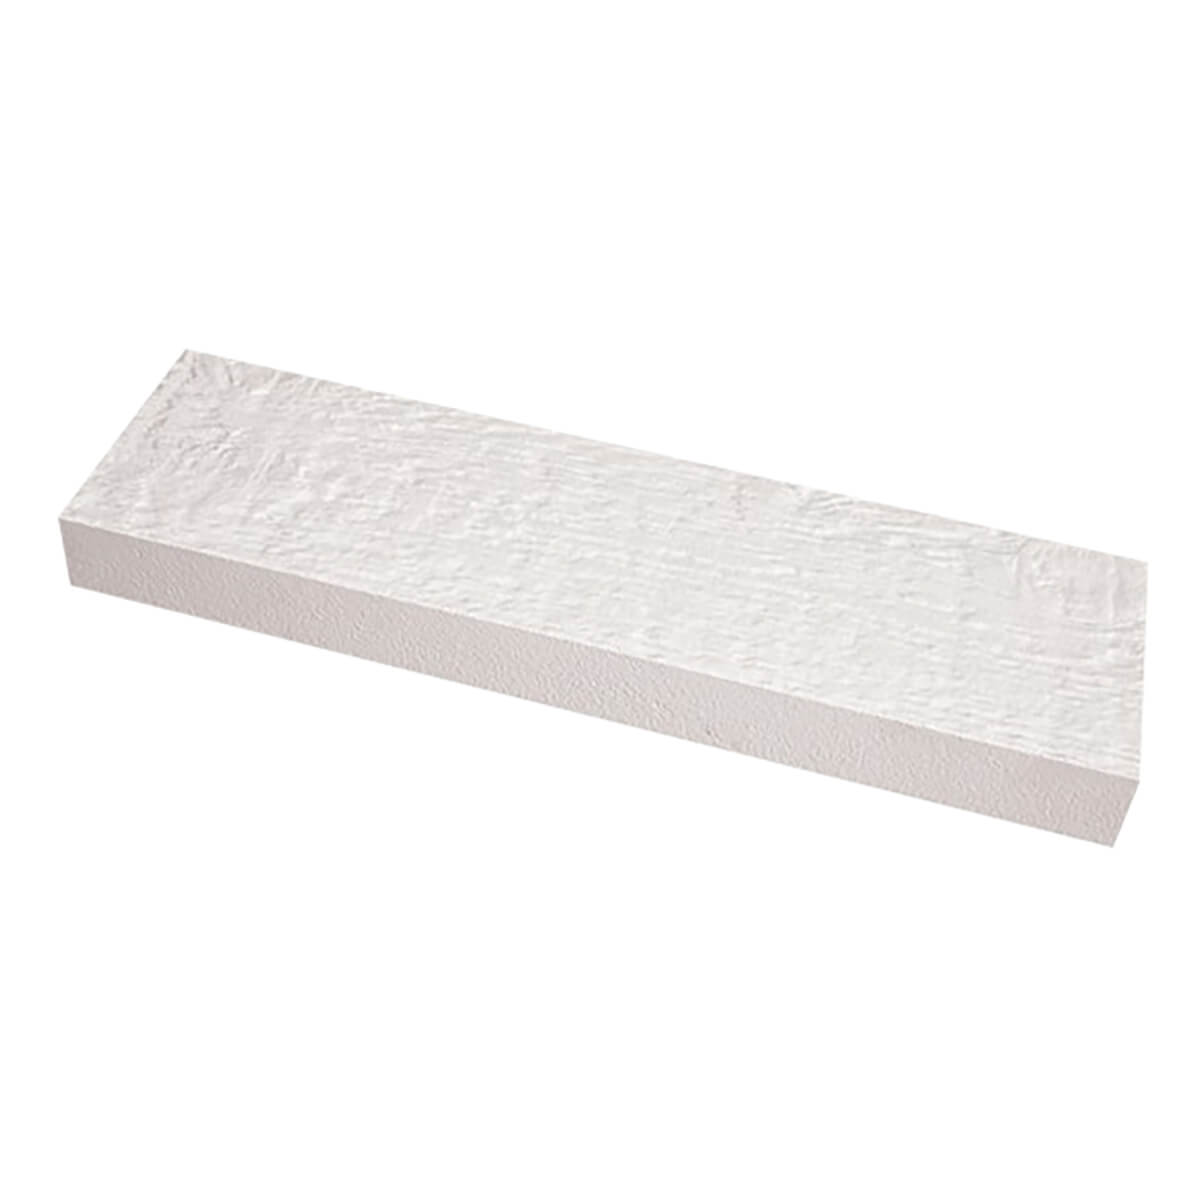 Trim board, White - 2  Pack - 5/4-in x 6-in x 12-ft